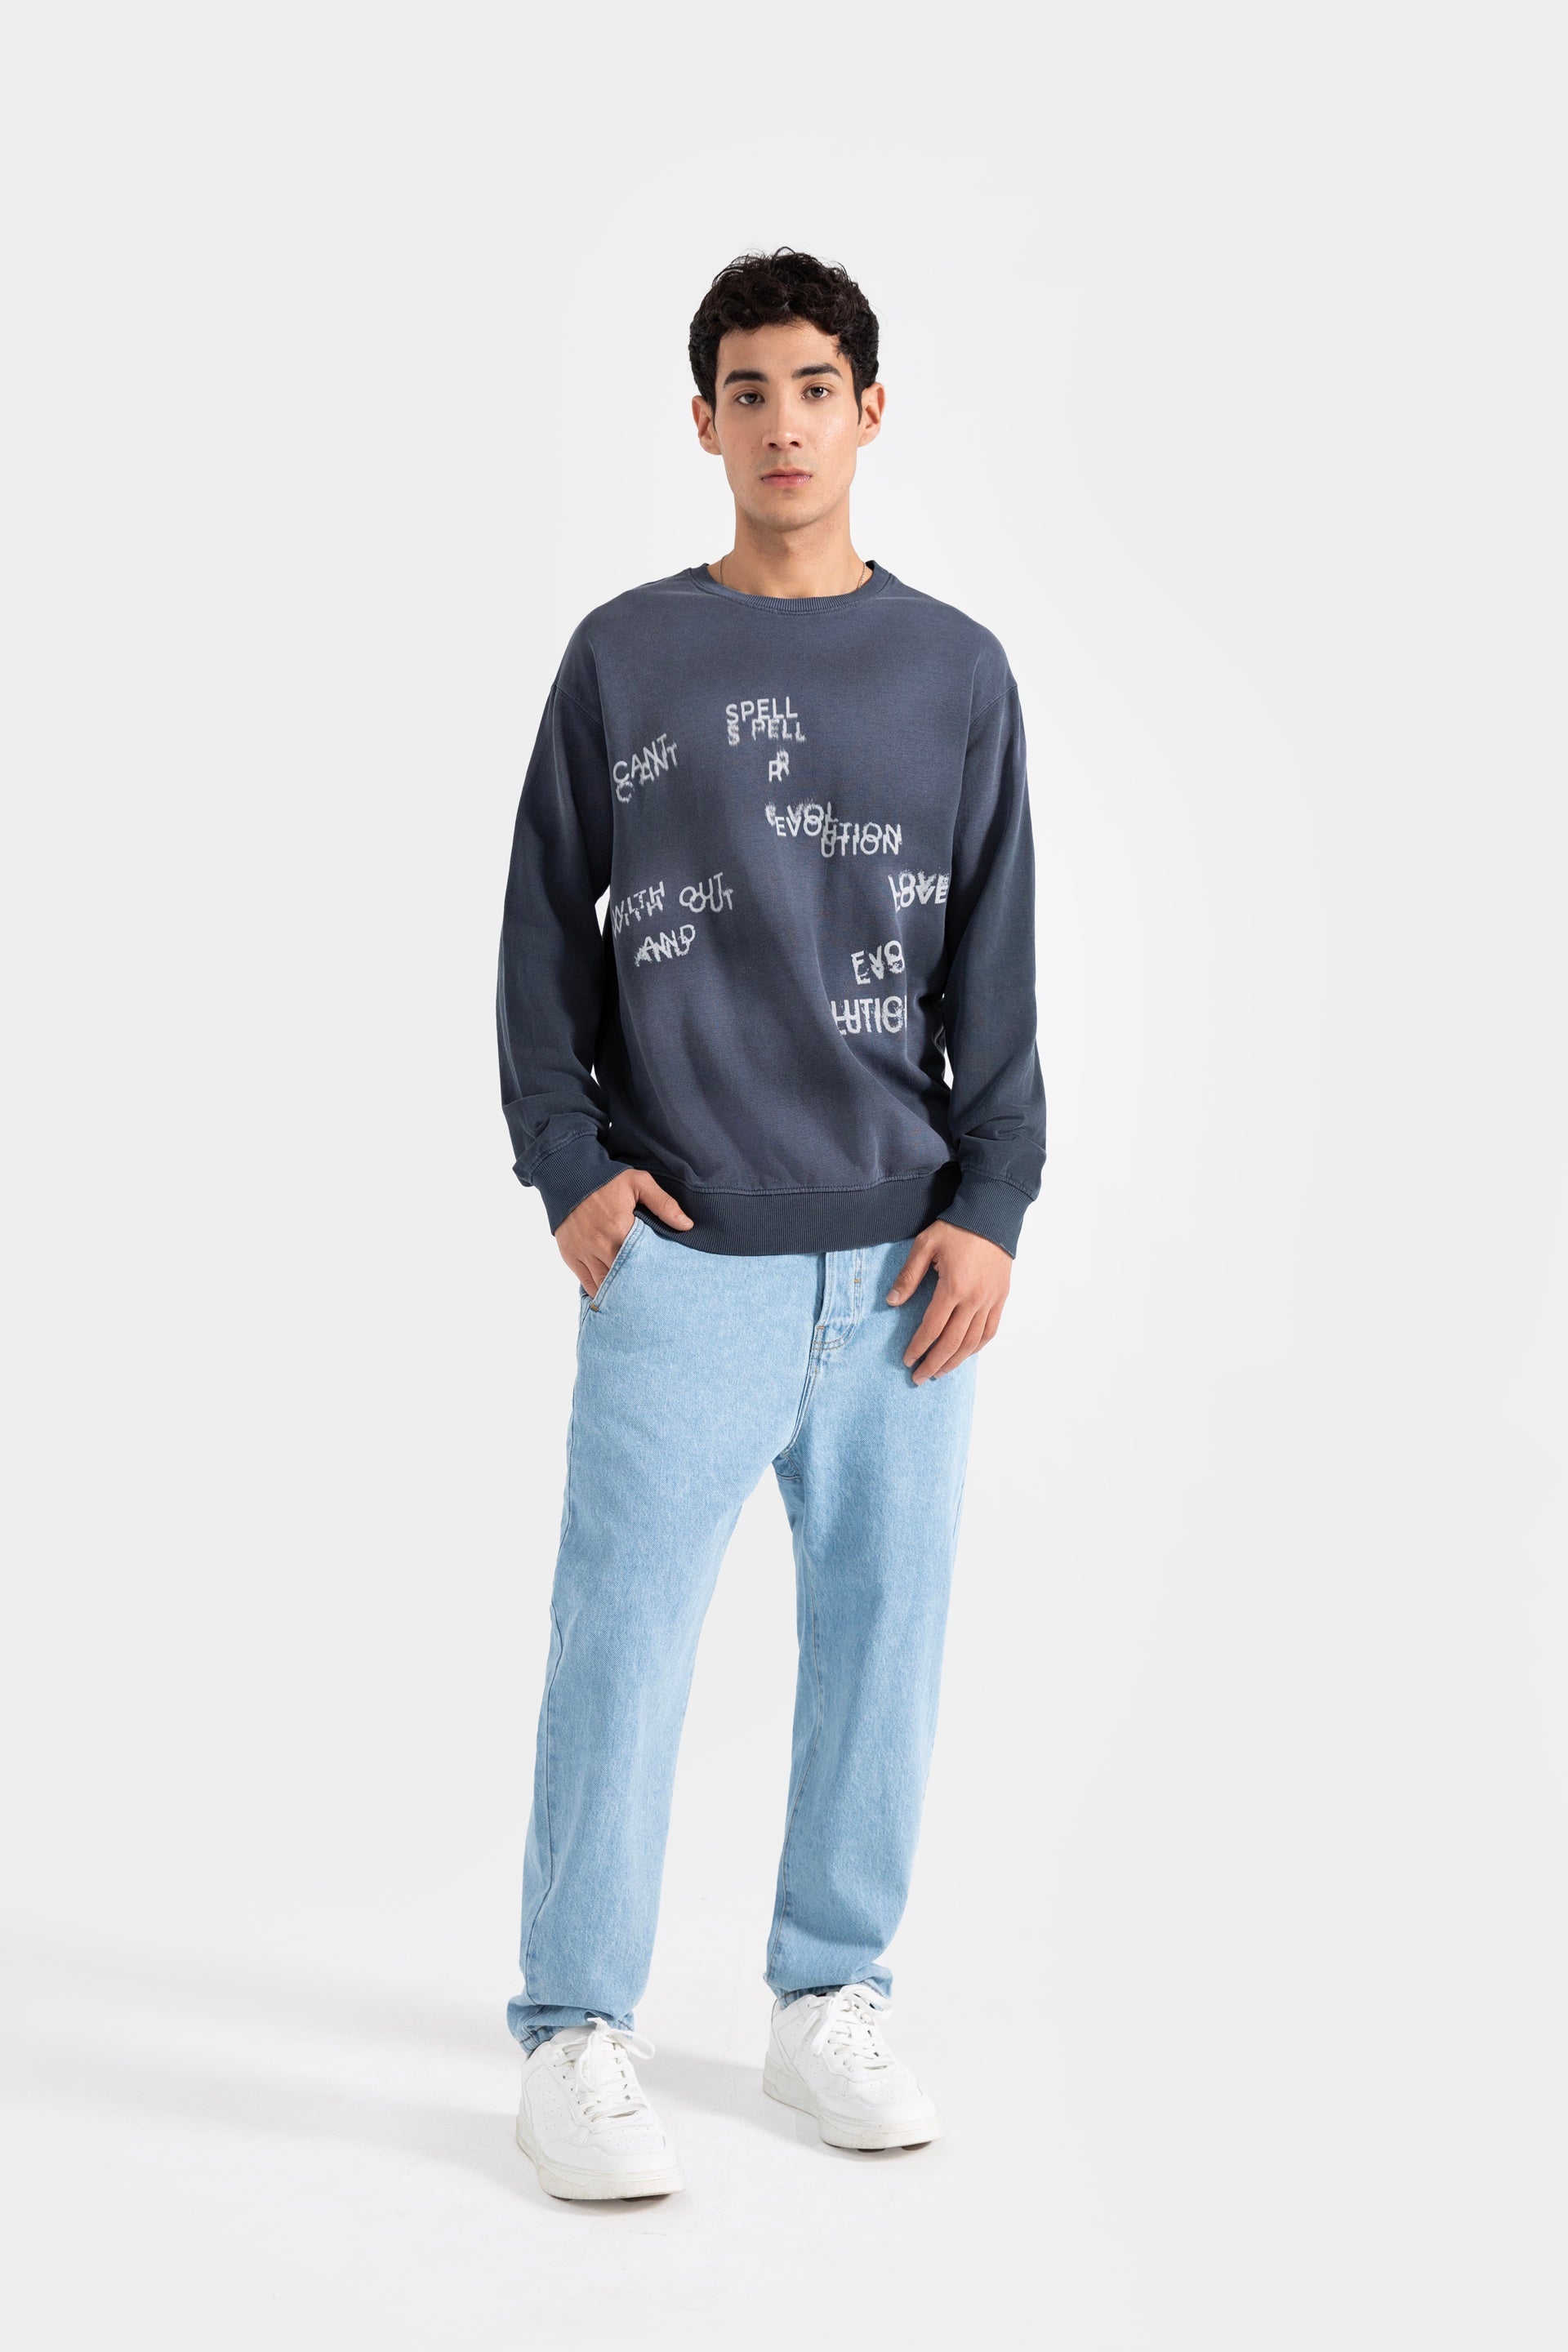 revolution graphic sweatshirt